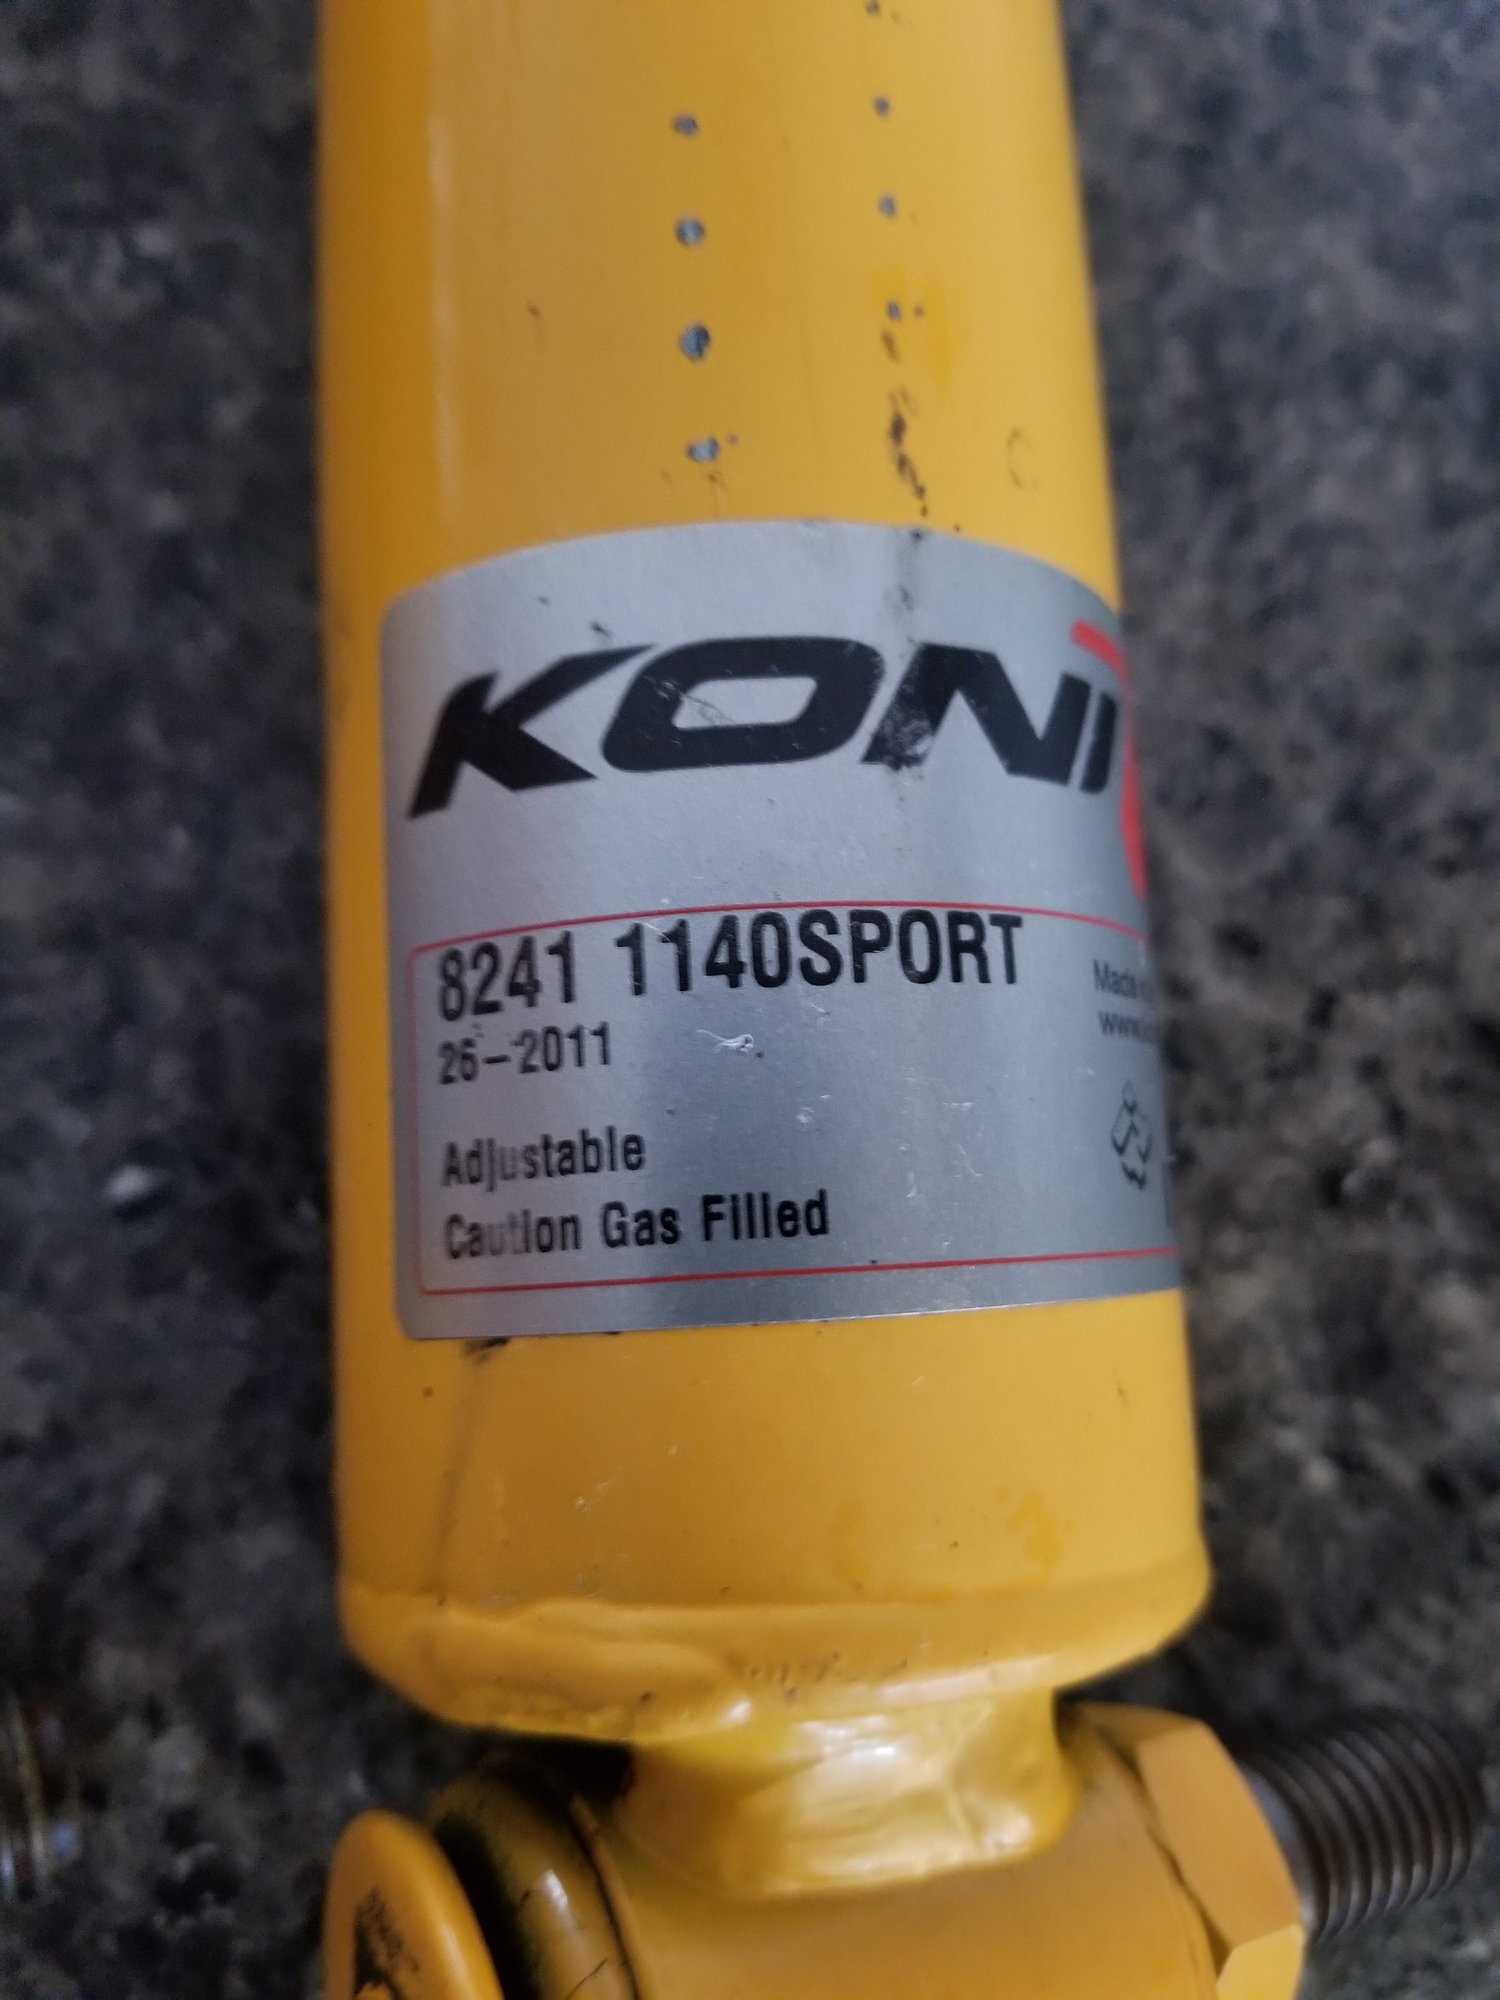  - Rear koni yellow adjustable shocks - La Puente, CA 91744, United States